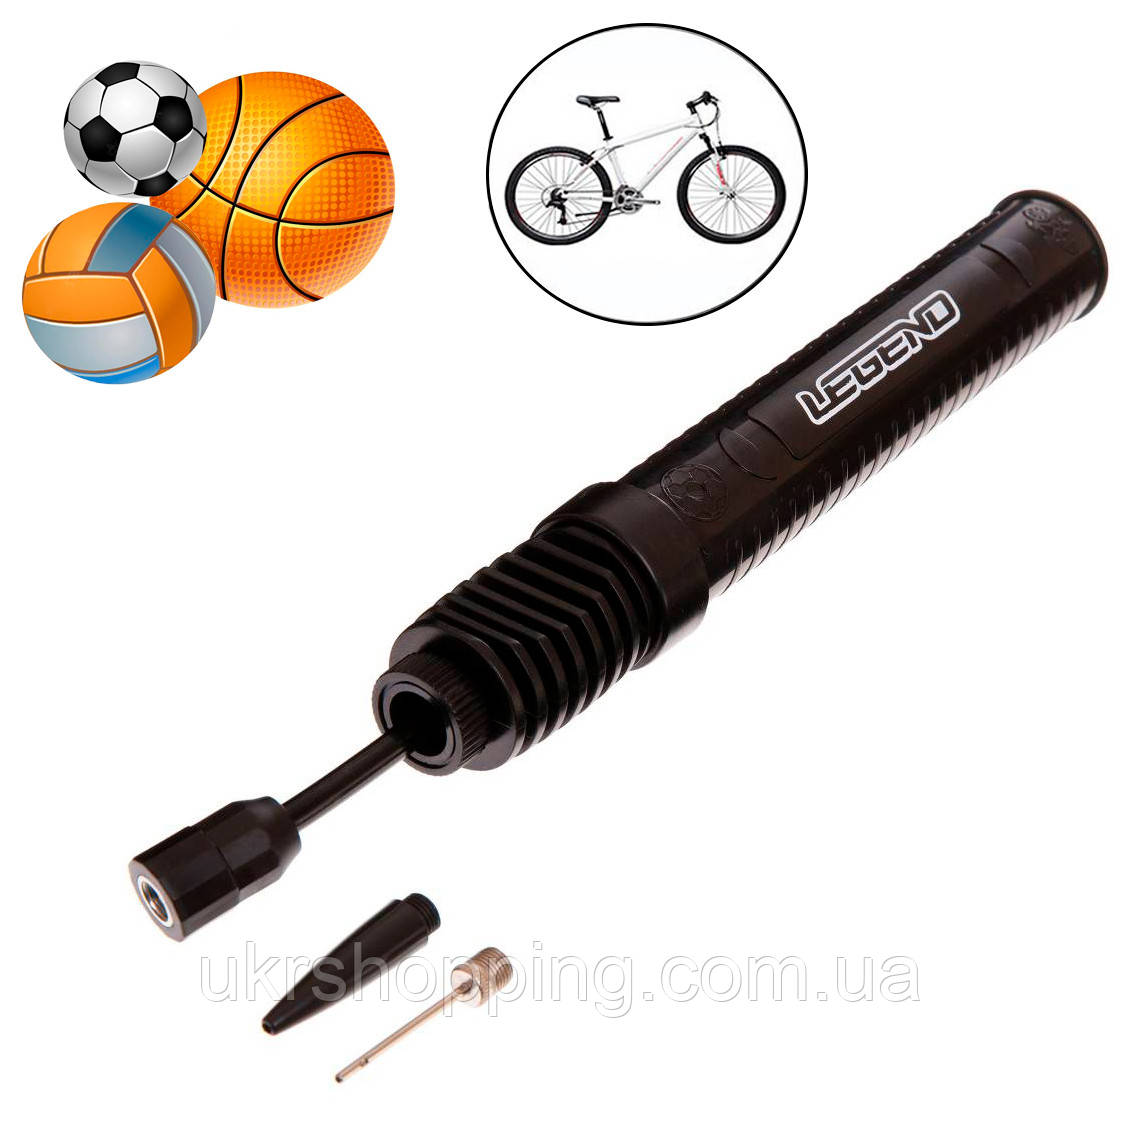 Ручний насос для м'яча "Legend Ball Pump FB-3422" Чорний, портативний насос велосипедний/футбольного м'яча